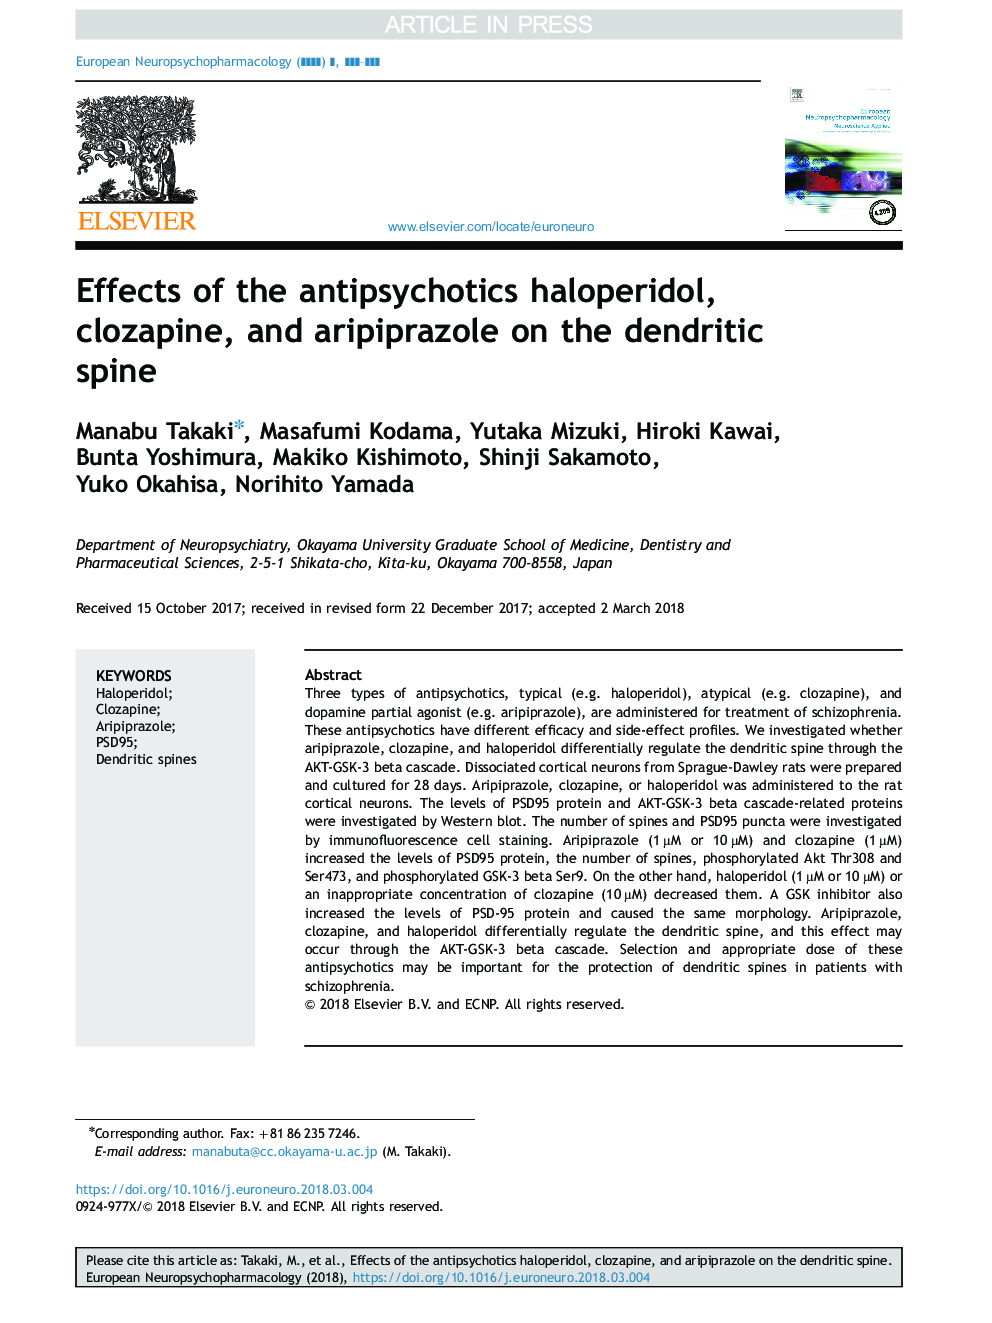 Effects of the antipsychotics haloperidol, clozapine, and aripiprazole on the dendritic spine